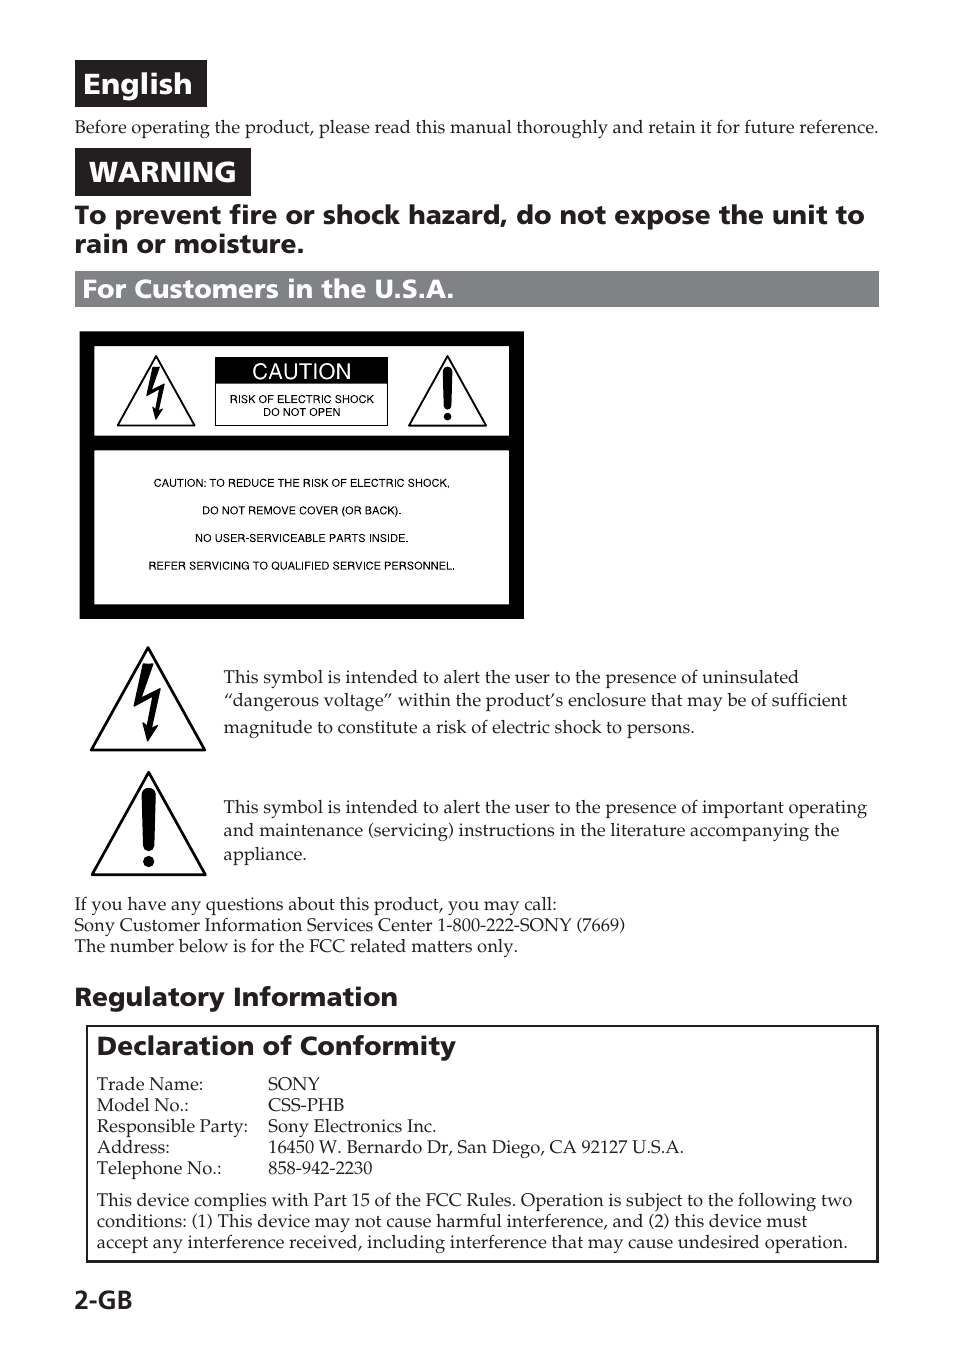 English, Warning, Regulatory information declaration of conformity | Sony Cyber-Shot Station CSS-PHB Manuel d'utilisation | Page 2 / 32